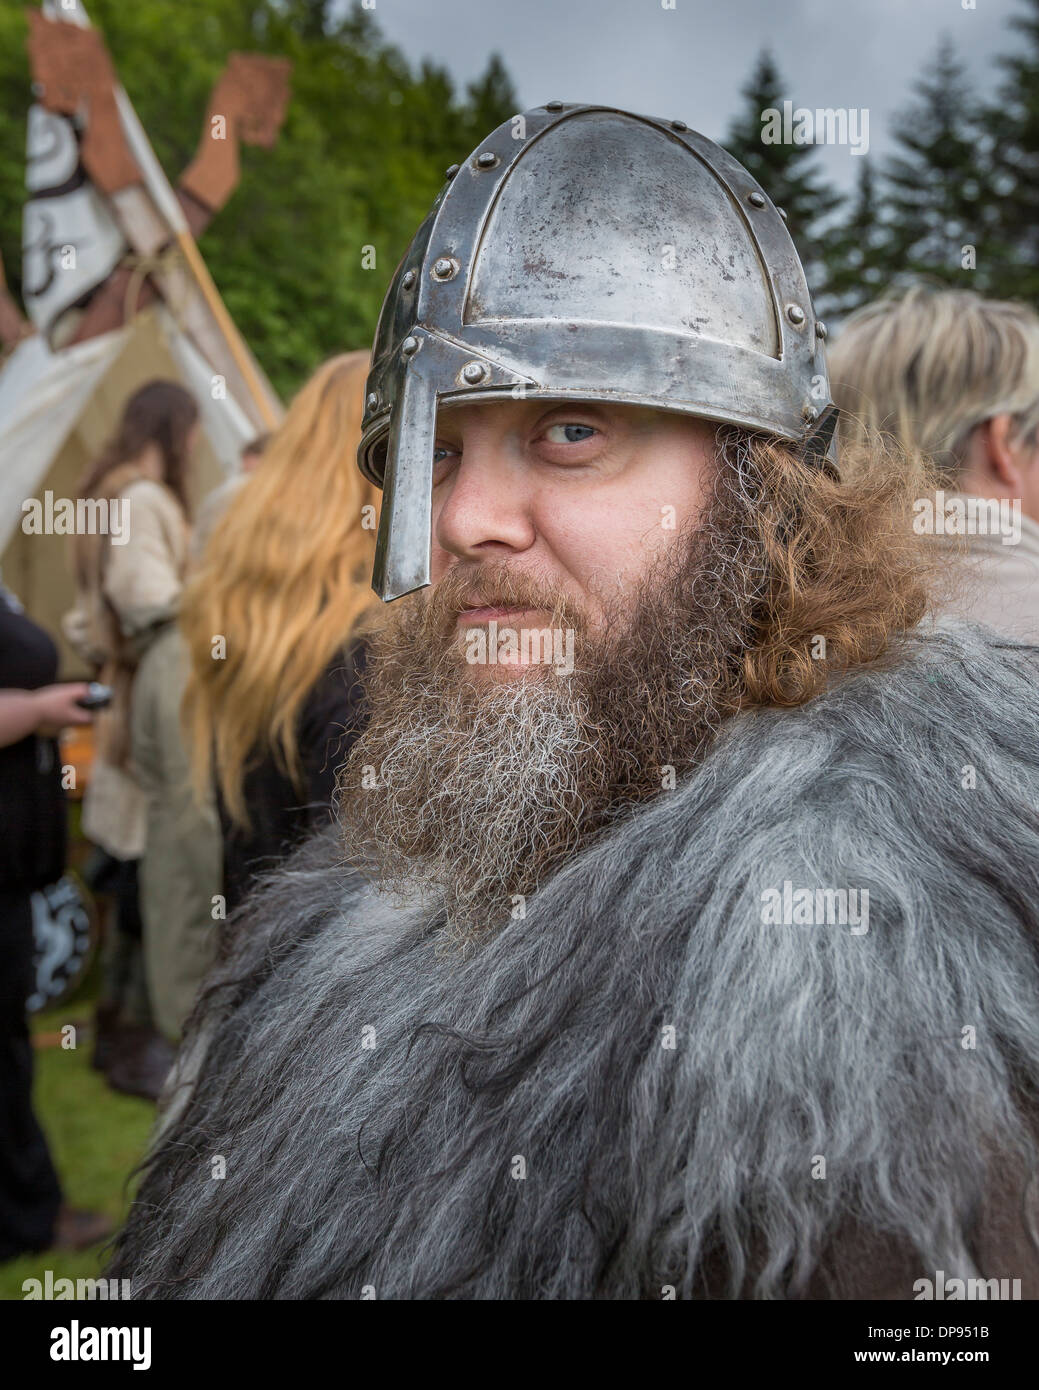 Portrait of male with beard and helmet dressed for a Viking festival, Hljomskalagardur park in Reykjavik, Iceland Stock Photo